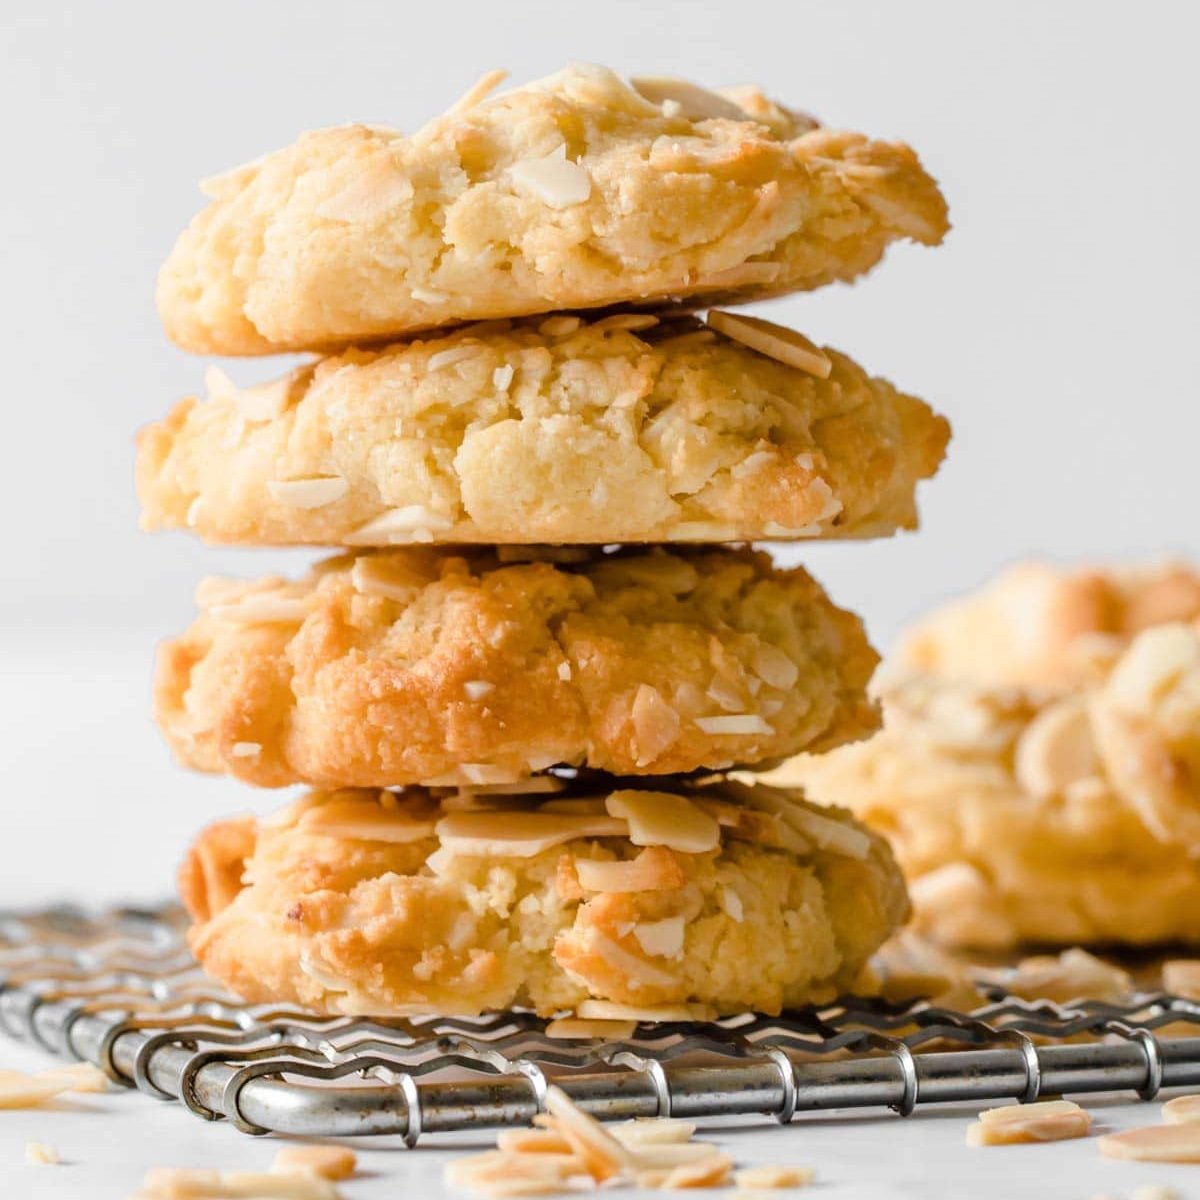 Sugar Free Cookies Recipes : 12 Sugar Free Cookie Recipes Taste Of Home ...